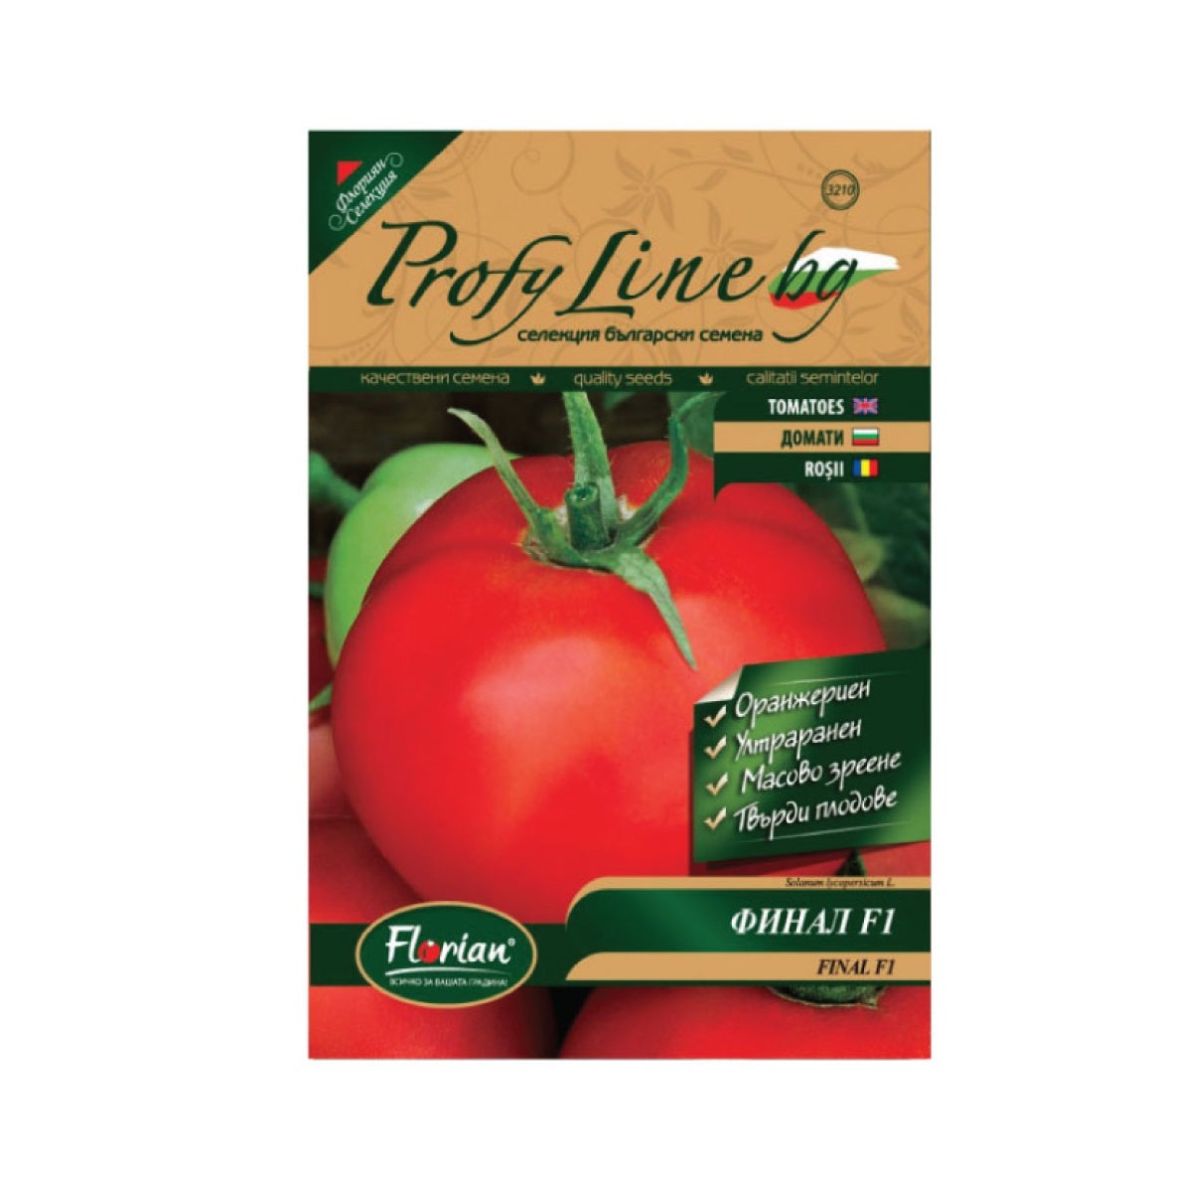 Tomate - Seminte de tomate FINAL F1, 100 seminte, FLORIAN, hectarul.ro